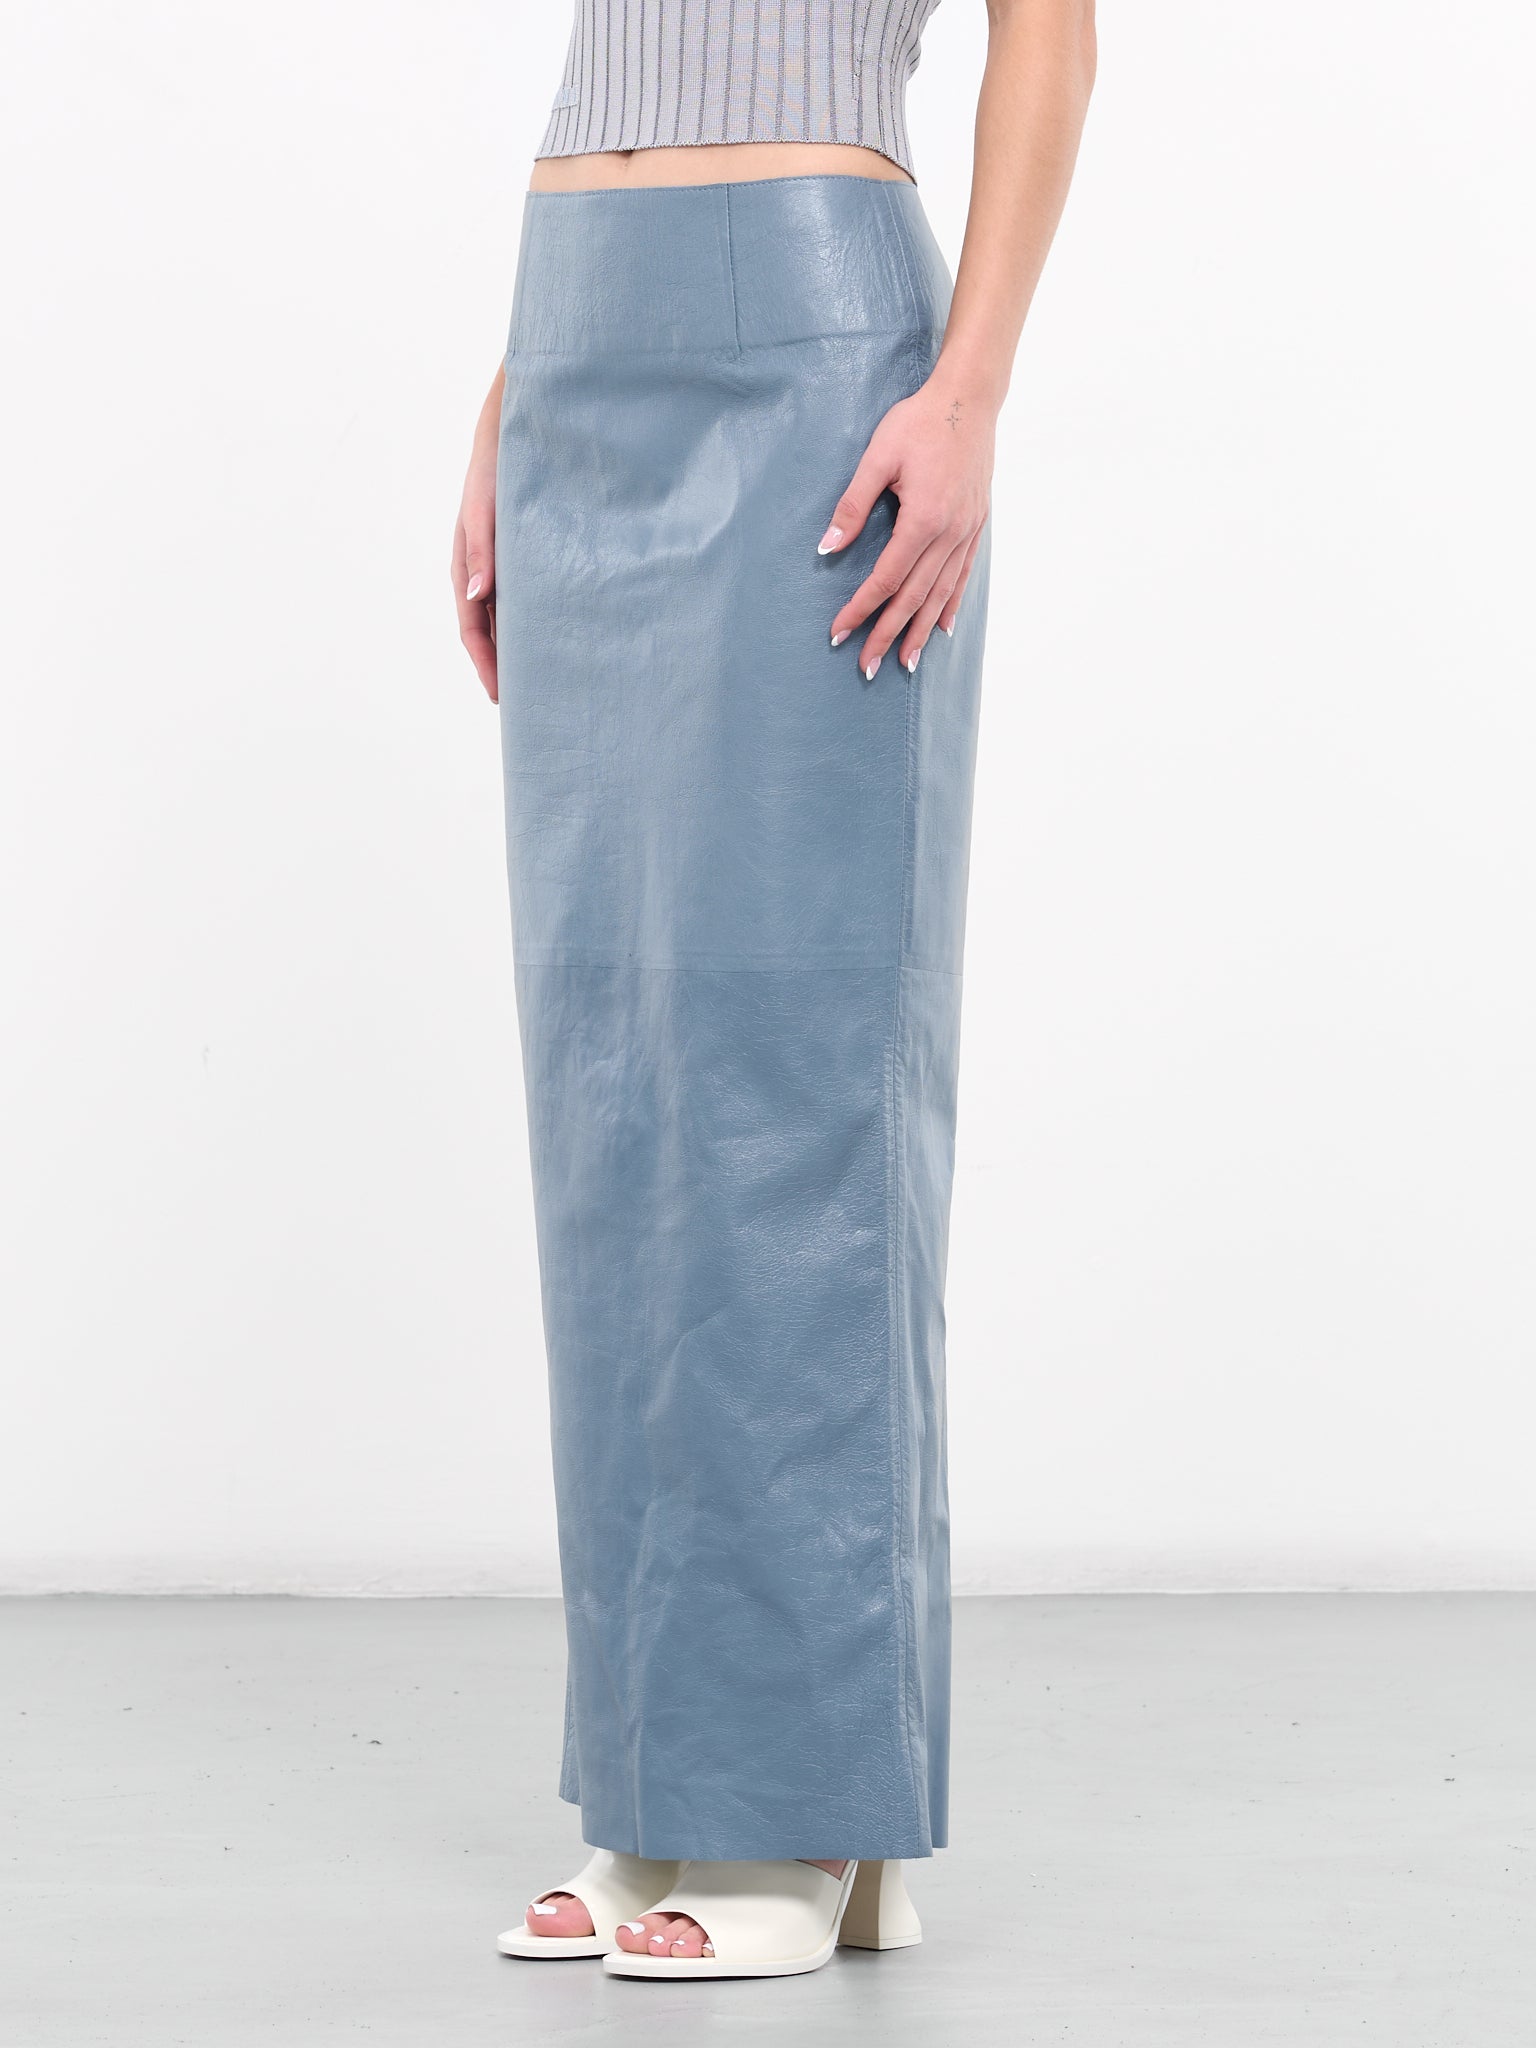 Blue Shiny Leather Pencil Skirt (GOMX0633A0-ULG153-POWDER-BLUE)